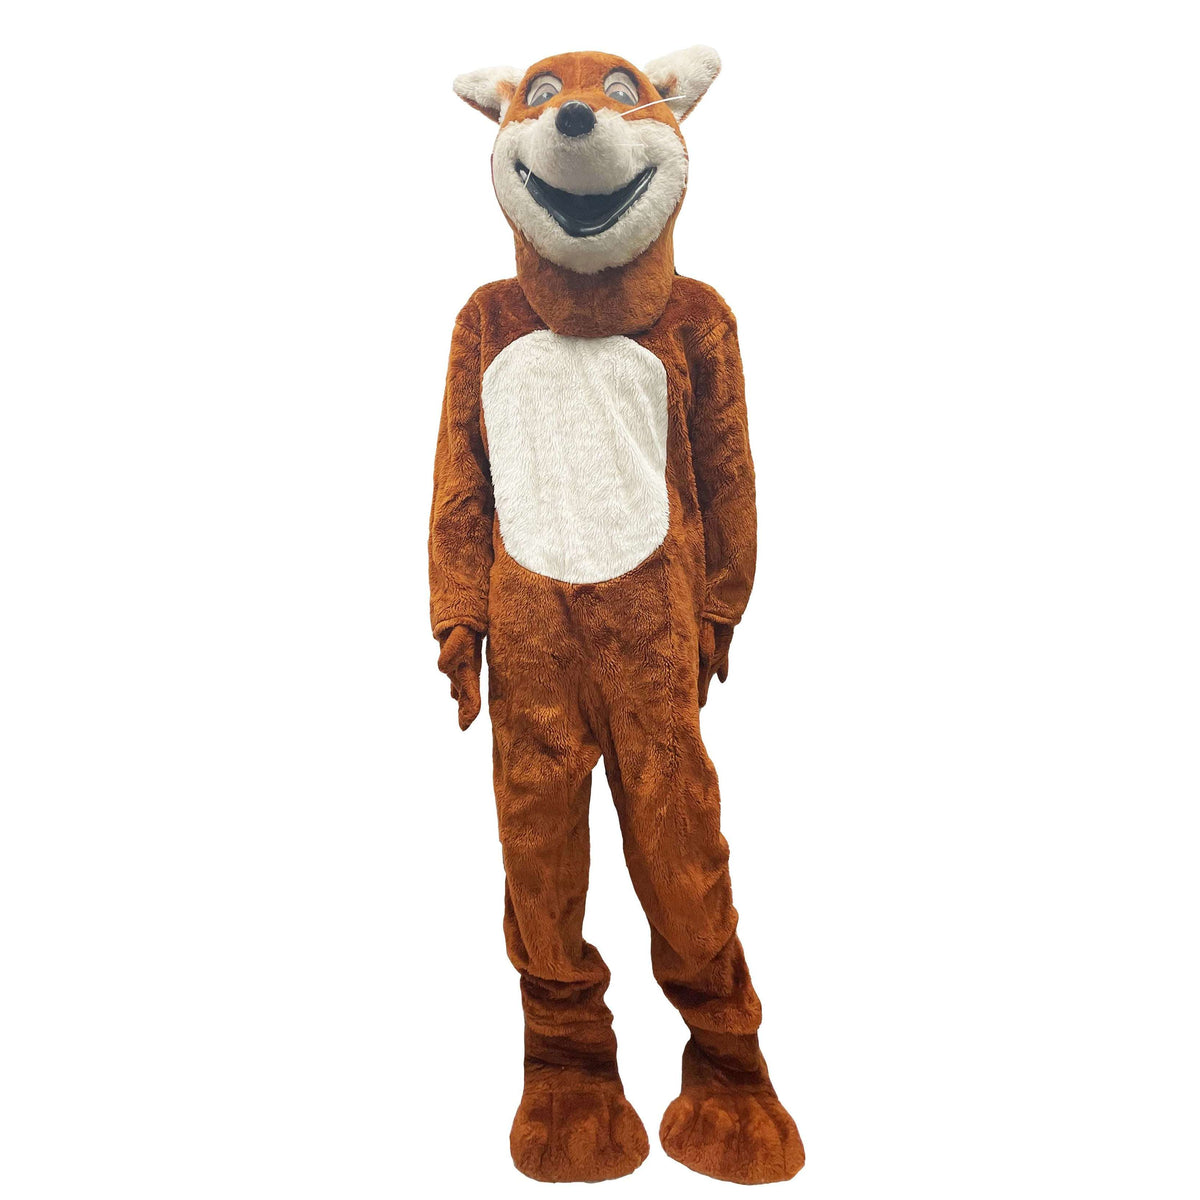 Smiley Fox Mascot Adult Costume